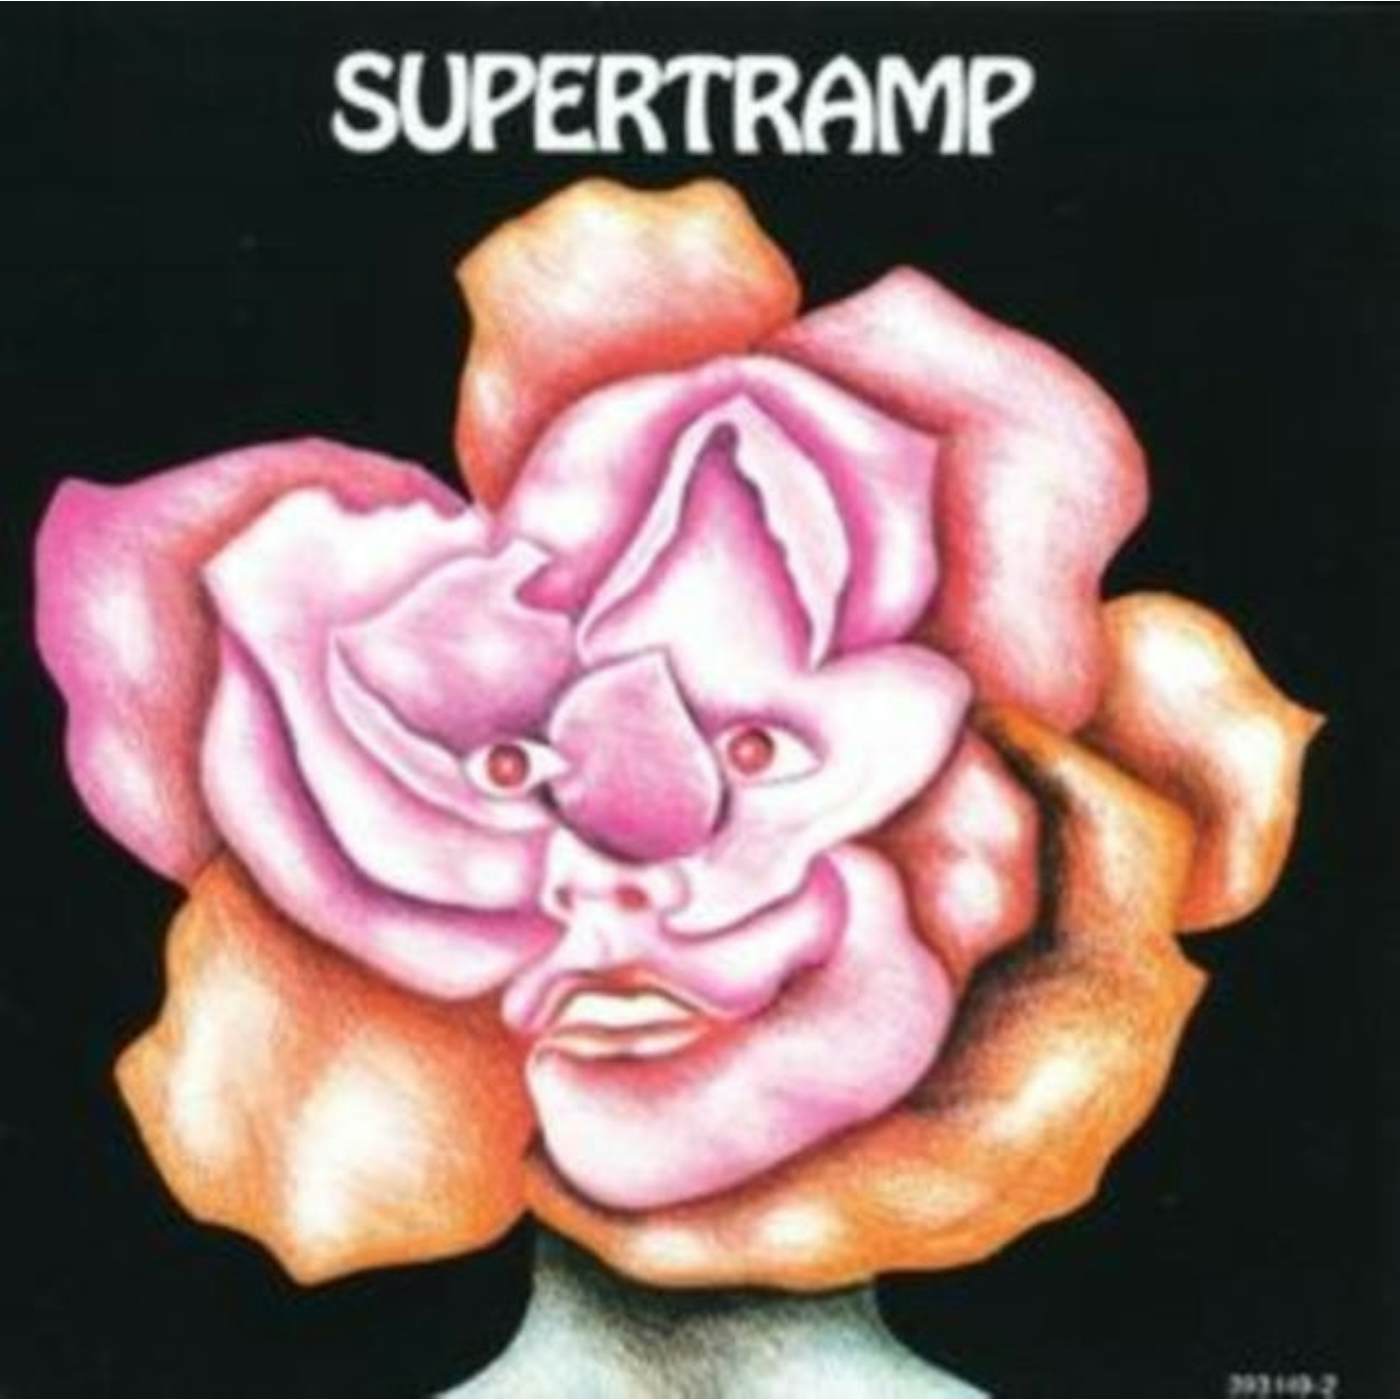 Supertramp CD - Supertramp